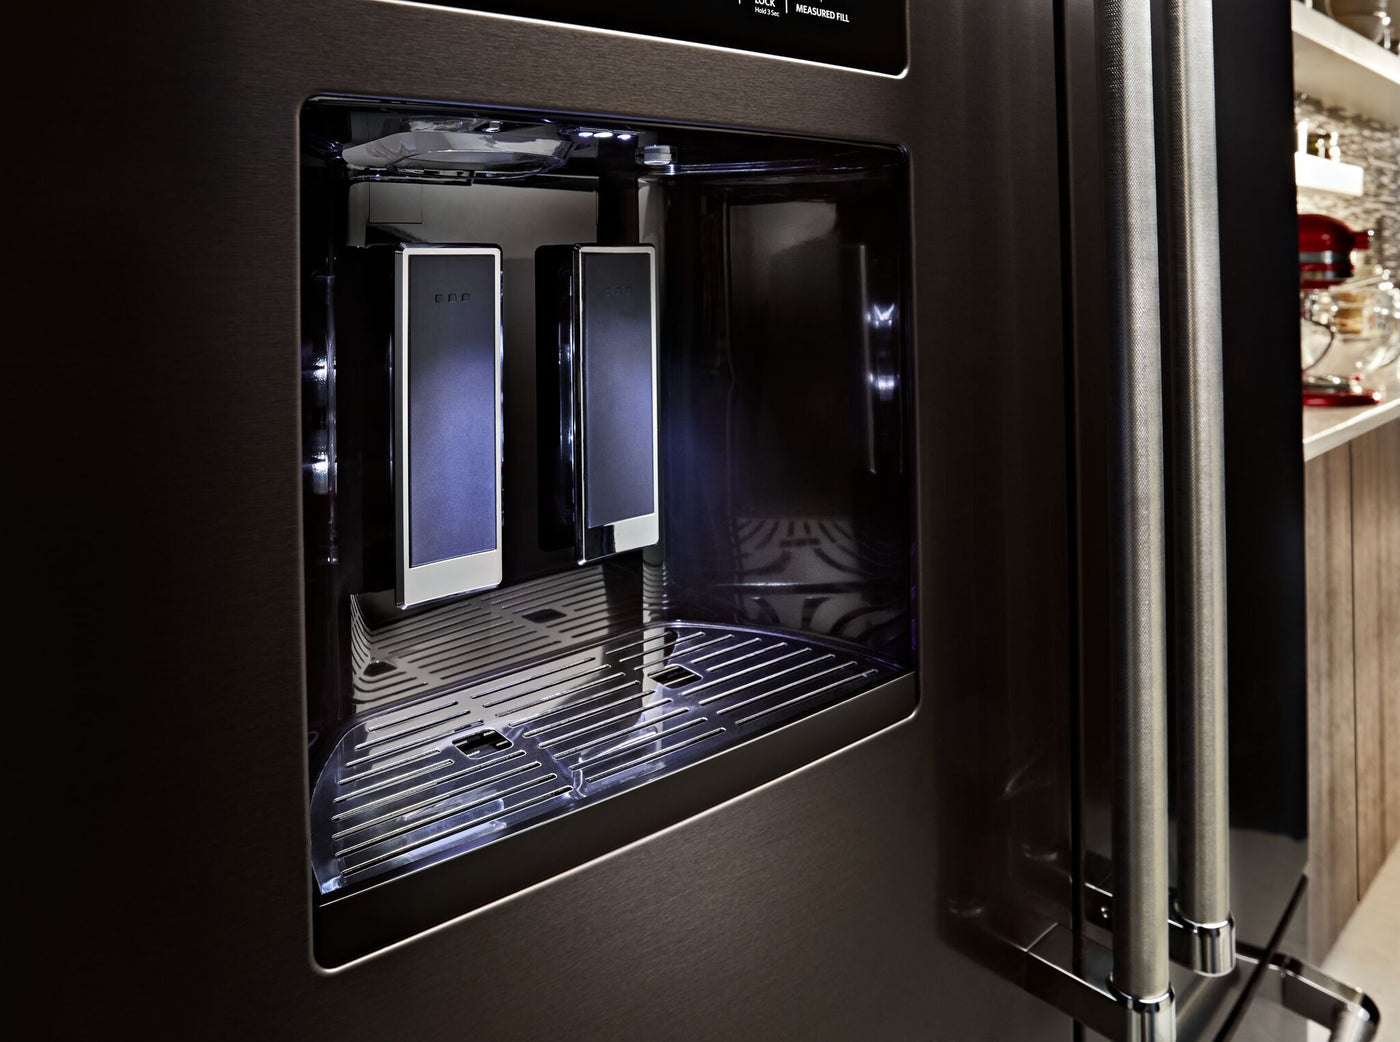 KitchenAid Black Stainless 35. 94" French Door Refrigerator (27.00 Cu Ft) - KRFF577KBS